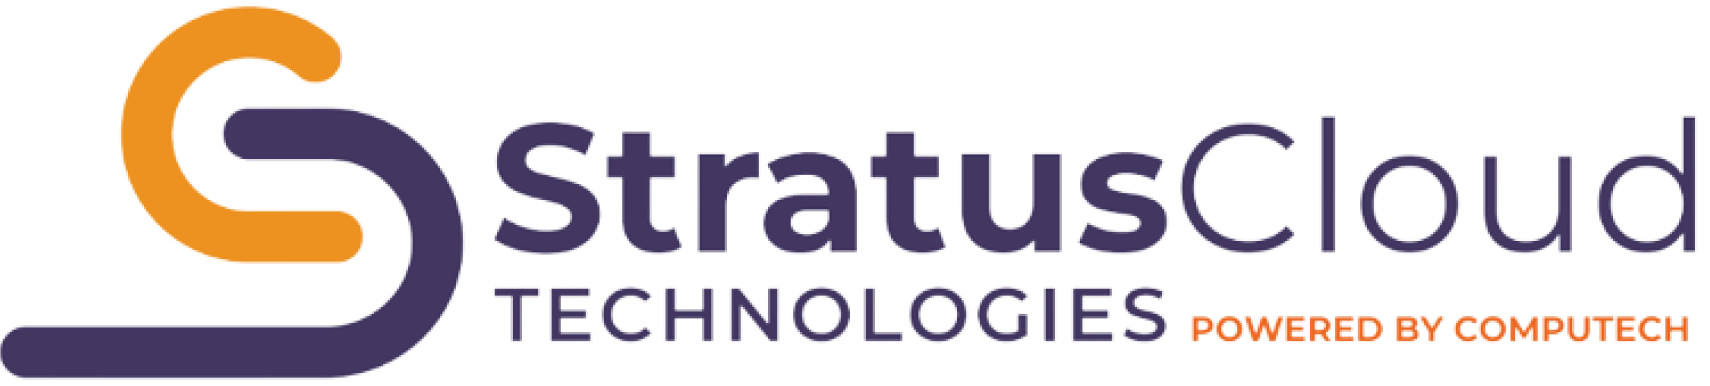 StratusCloud Technologies Logo